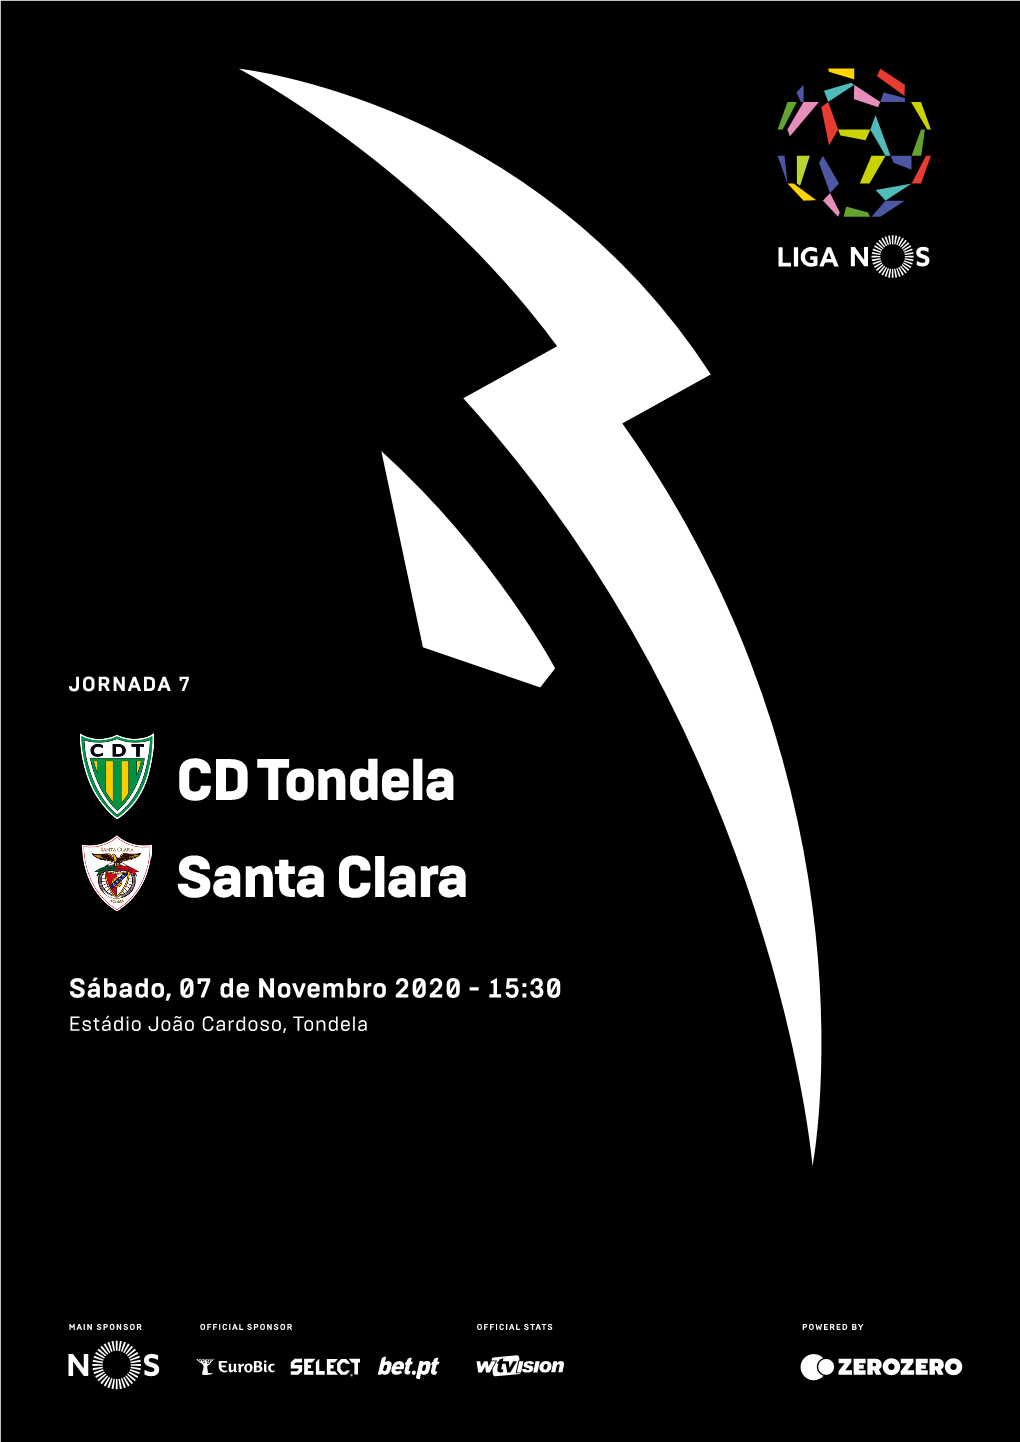 CD Tondela Santa Clara